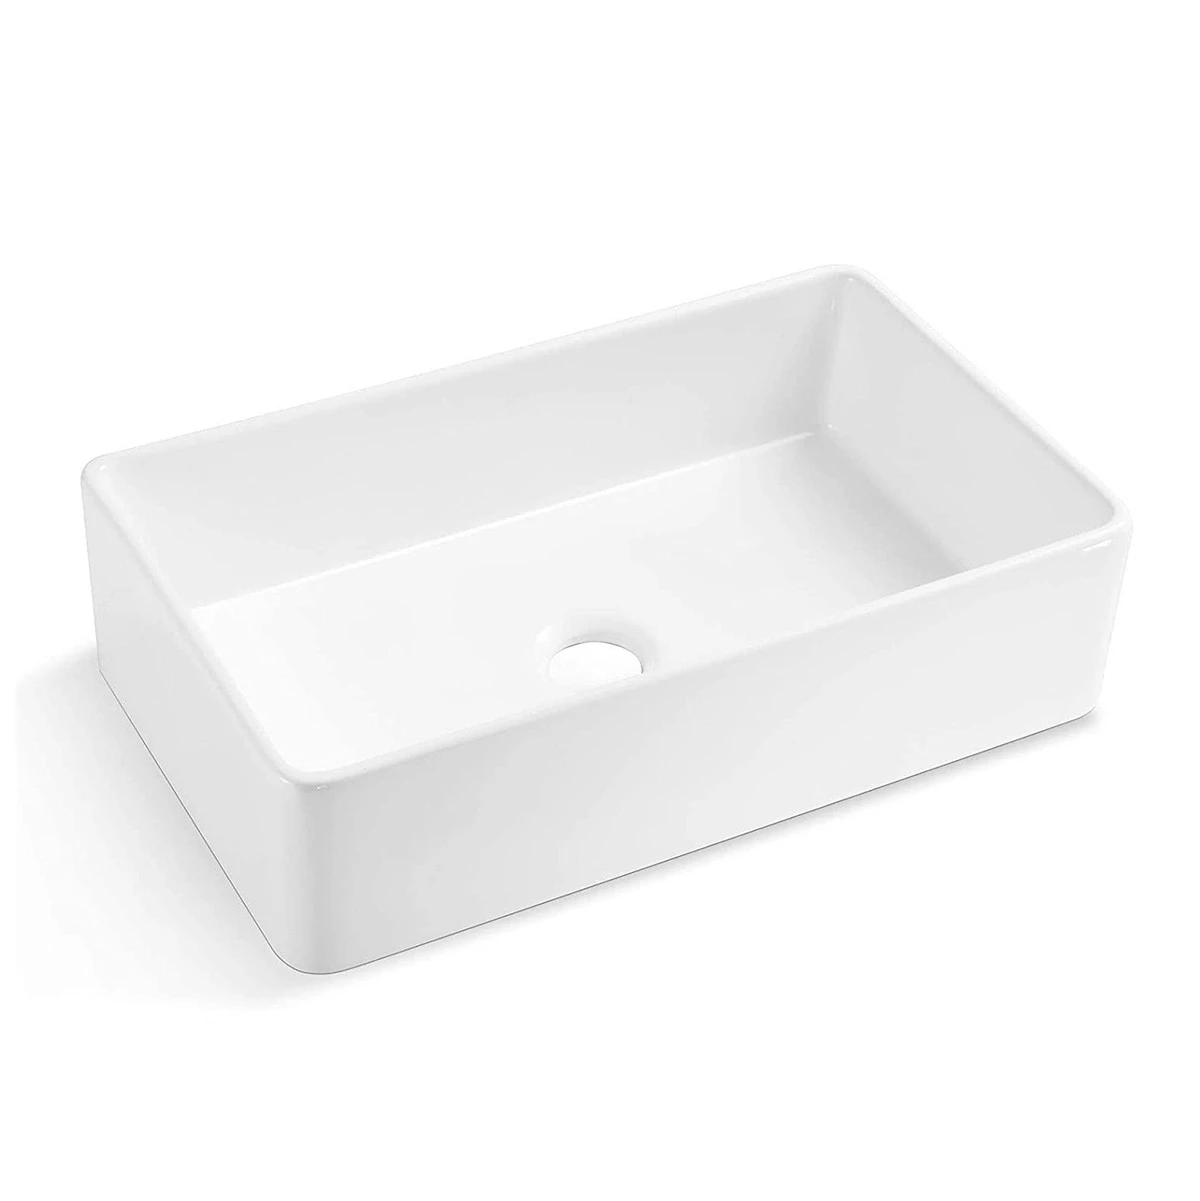 33" x 20" CUPC Single Bowl White Ceramic Kitchen Sink Basin